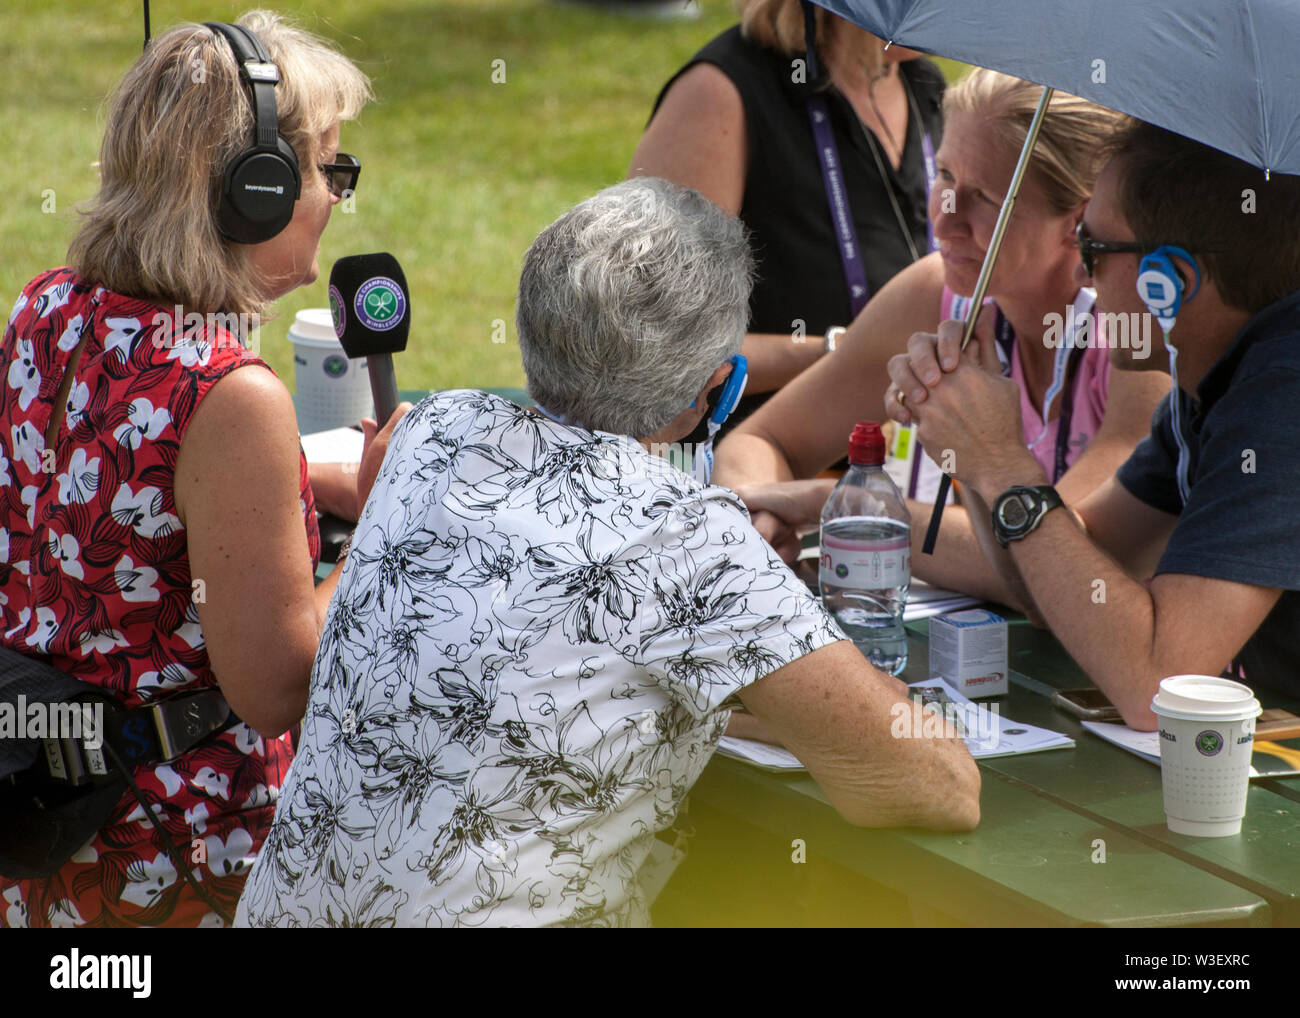 wimbledon radio presenter interviewing spectators on Henman hill / Murray mount at 2019 Wimbledon tennis championship Stock Photo